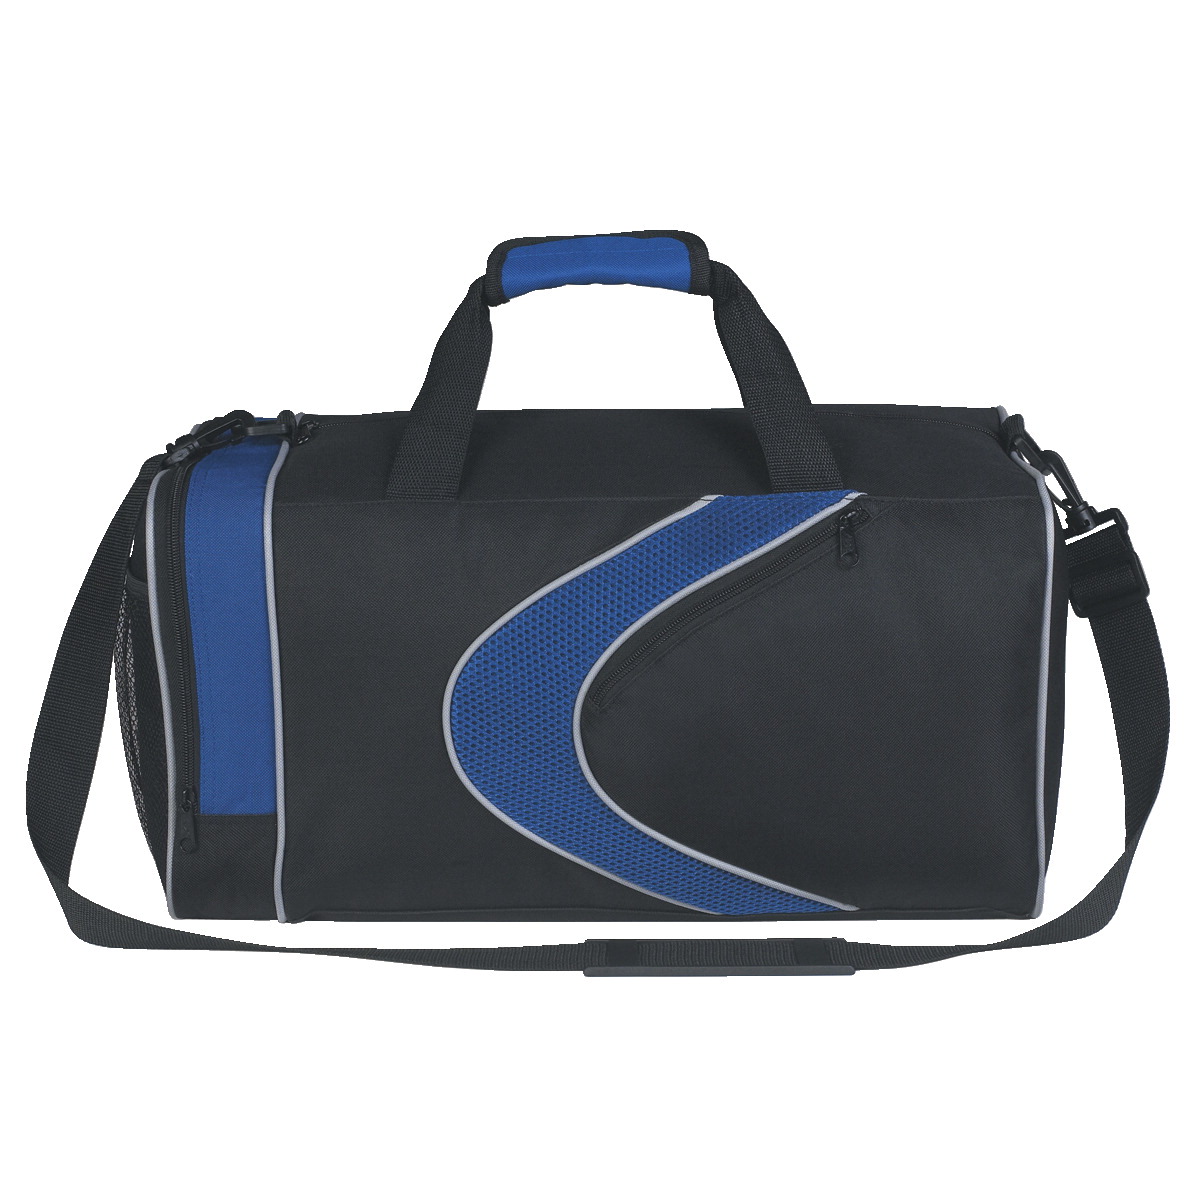 19 X 10 In. Sports Duffle Bag, Polyester & Microfiber - Royal Blue & Black